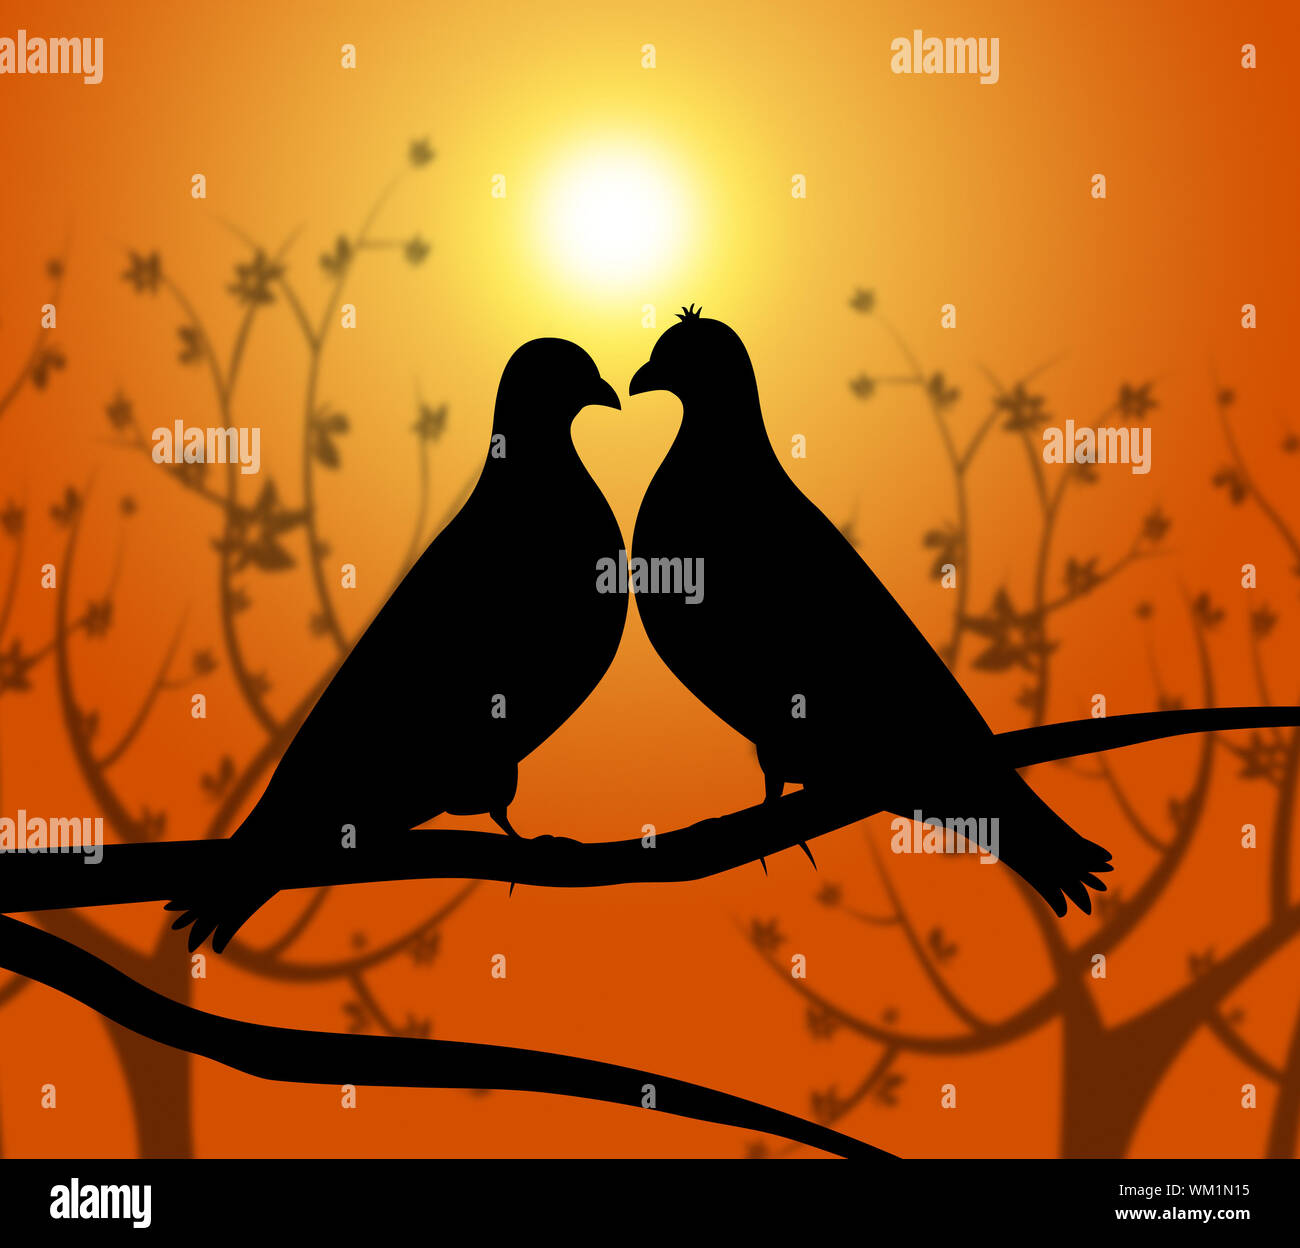 Love Birds Indicating Adoration Dating And Romance Stock Photo - Alamy